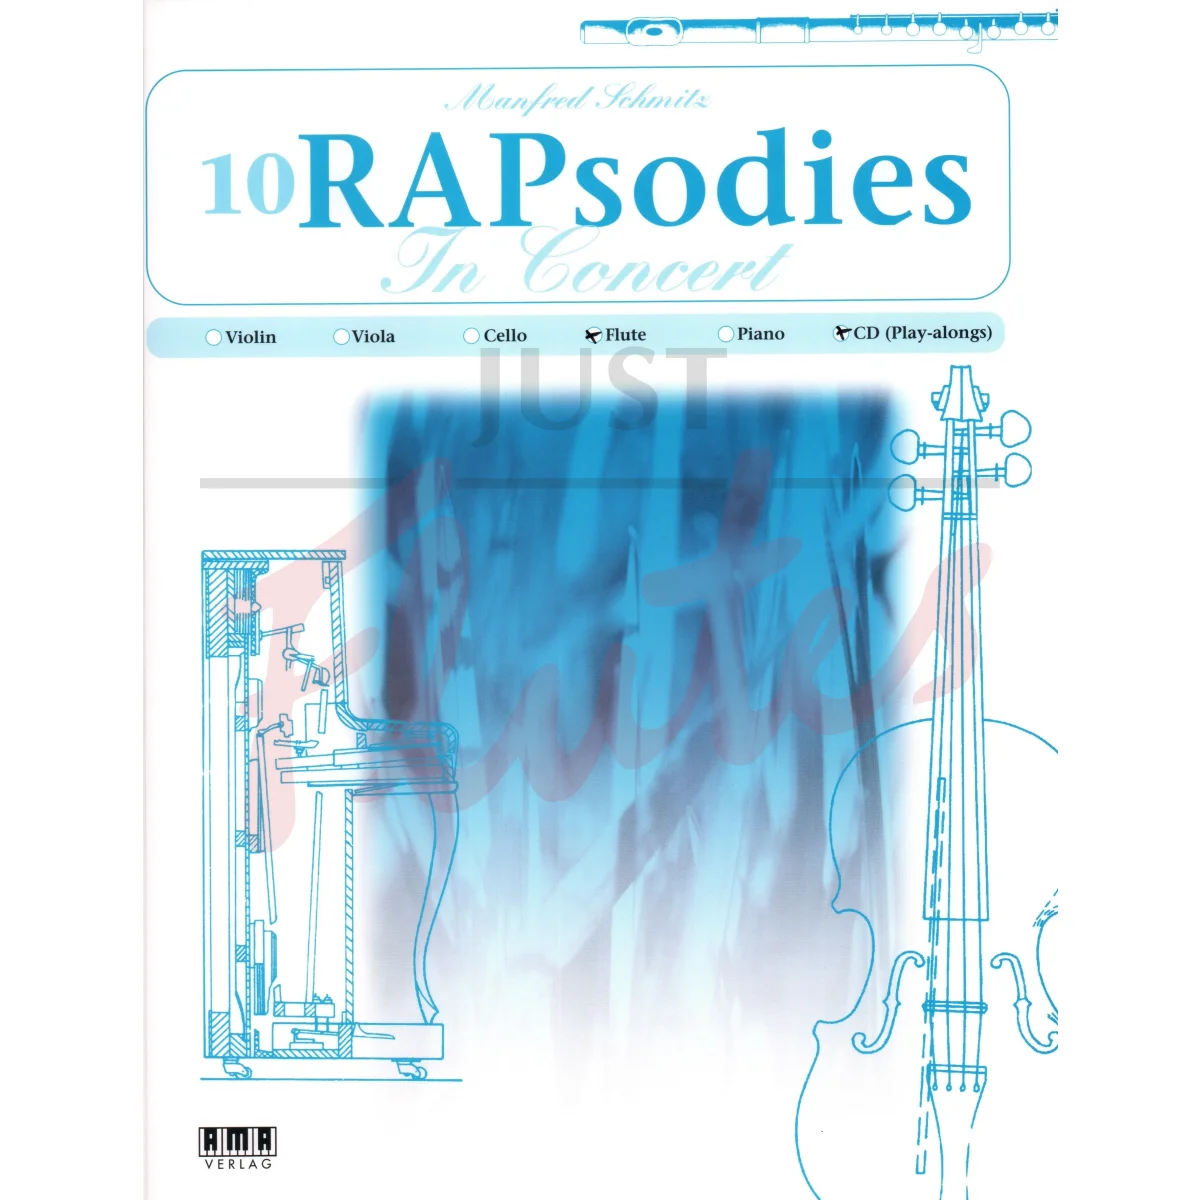 10 RAPsodies in Concert for Flute